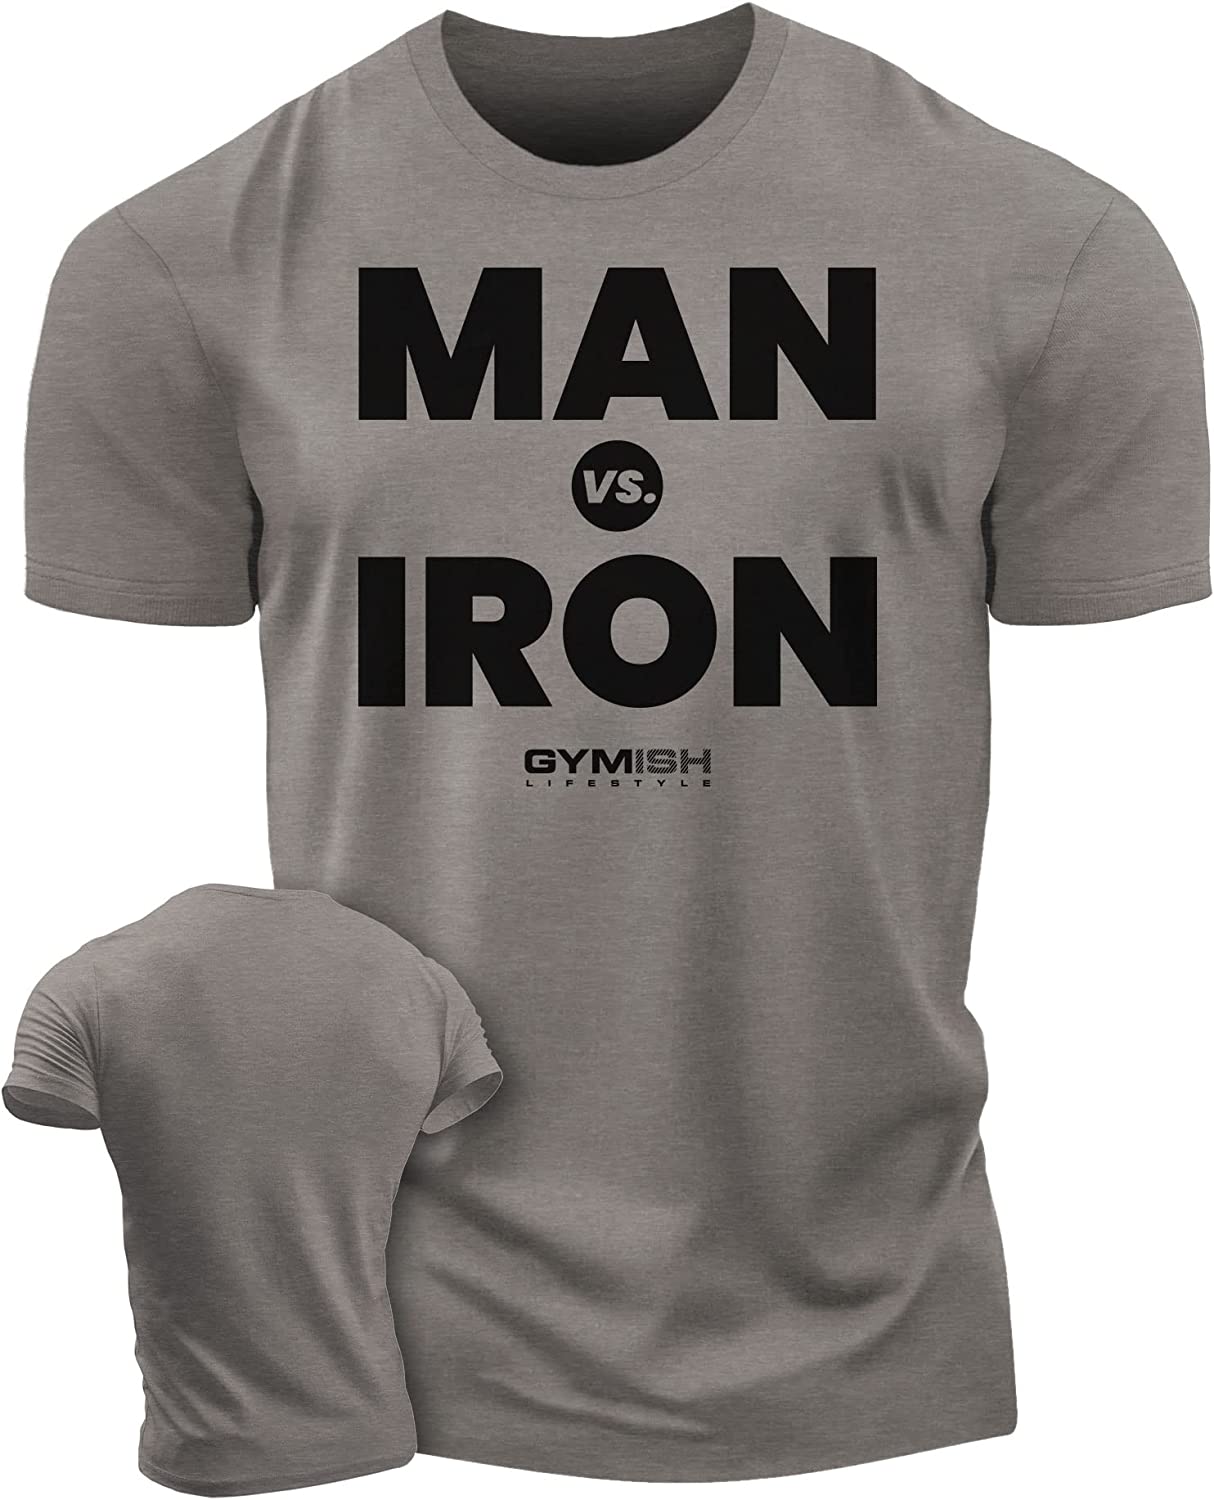 Workout Shirts for Men, Iron Discipline Funny Workout Gym Shirt